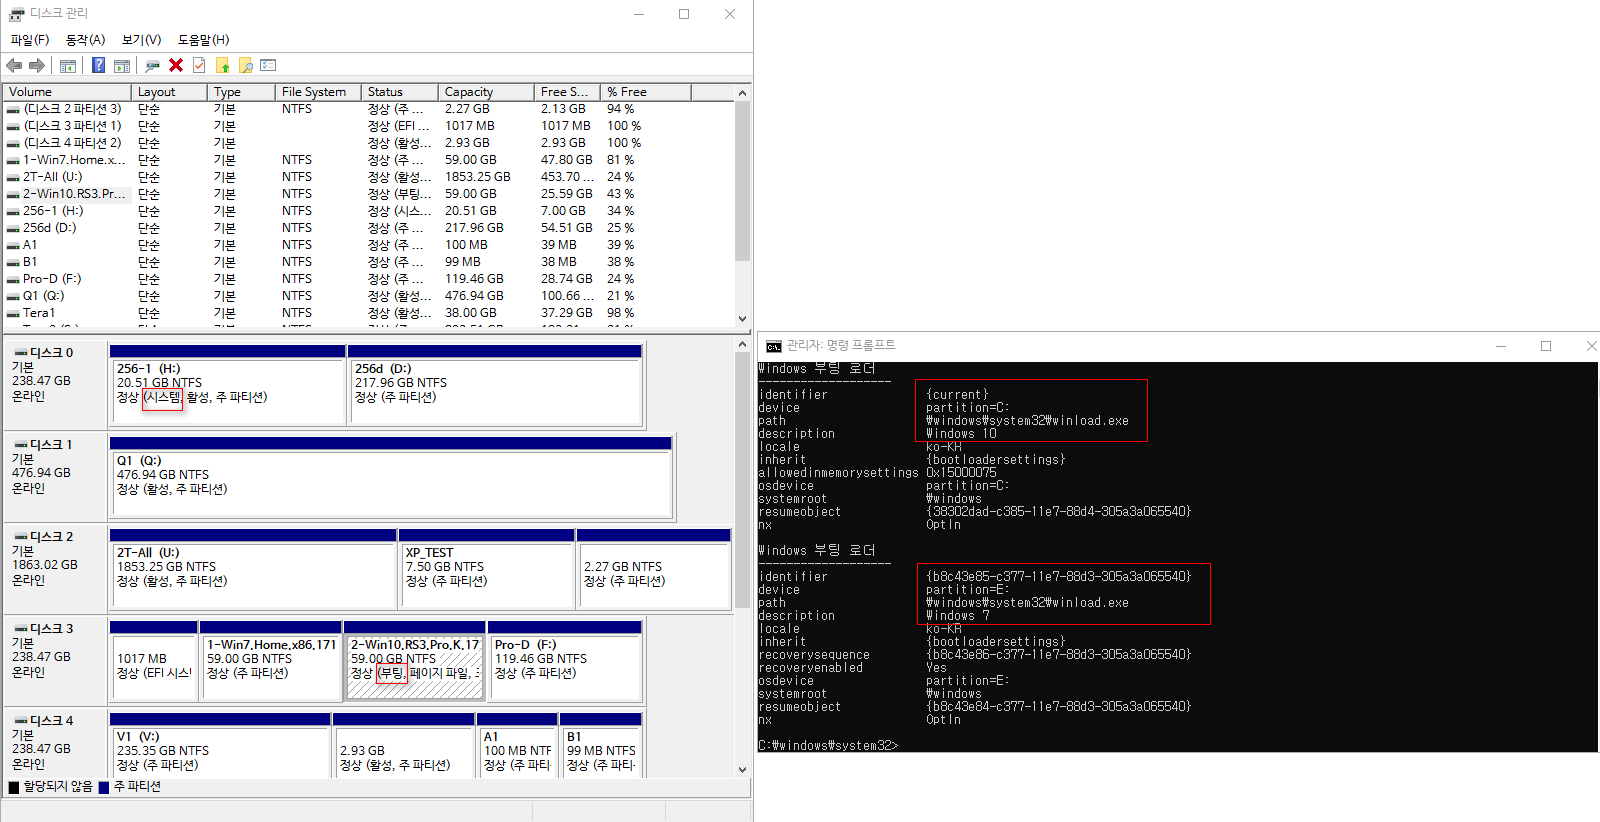 grub4dos로 GPT 디스크에 있는 윈도7 32비트 설치하여 부팅하기 - bootmgr 이름 수정하여 다른 bootmgr과 구분함-성공2 - 기존에 UEFI로 부팅하여 윈도10도 부팅 추가함 - bootmgr 이름 또 수정함 - 멀티부팅 성공 2017-11-07_154344.png